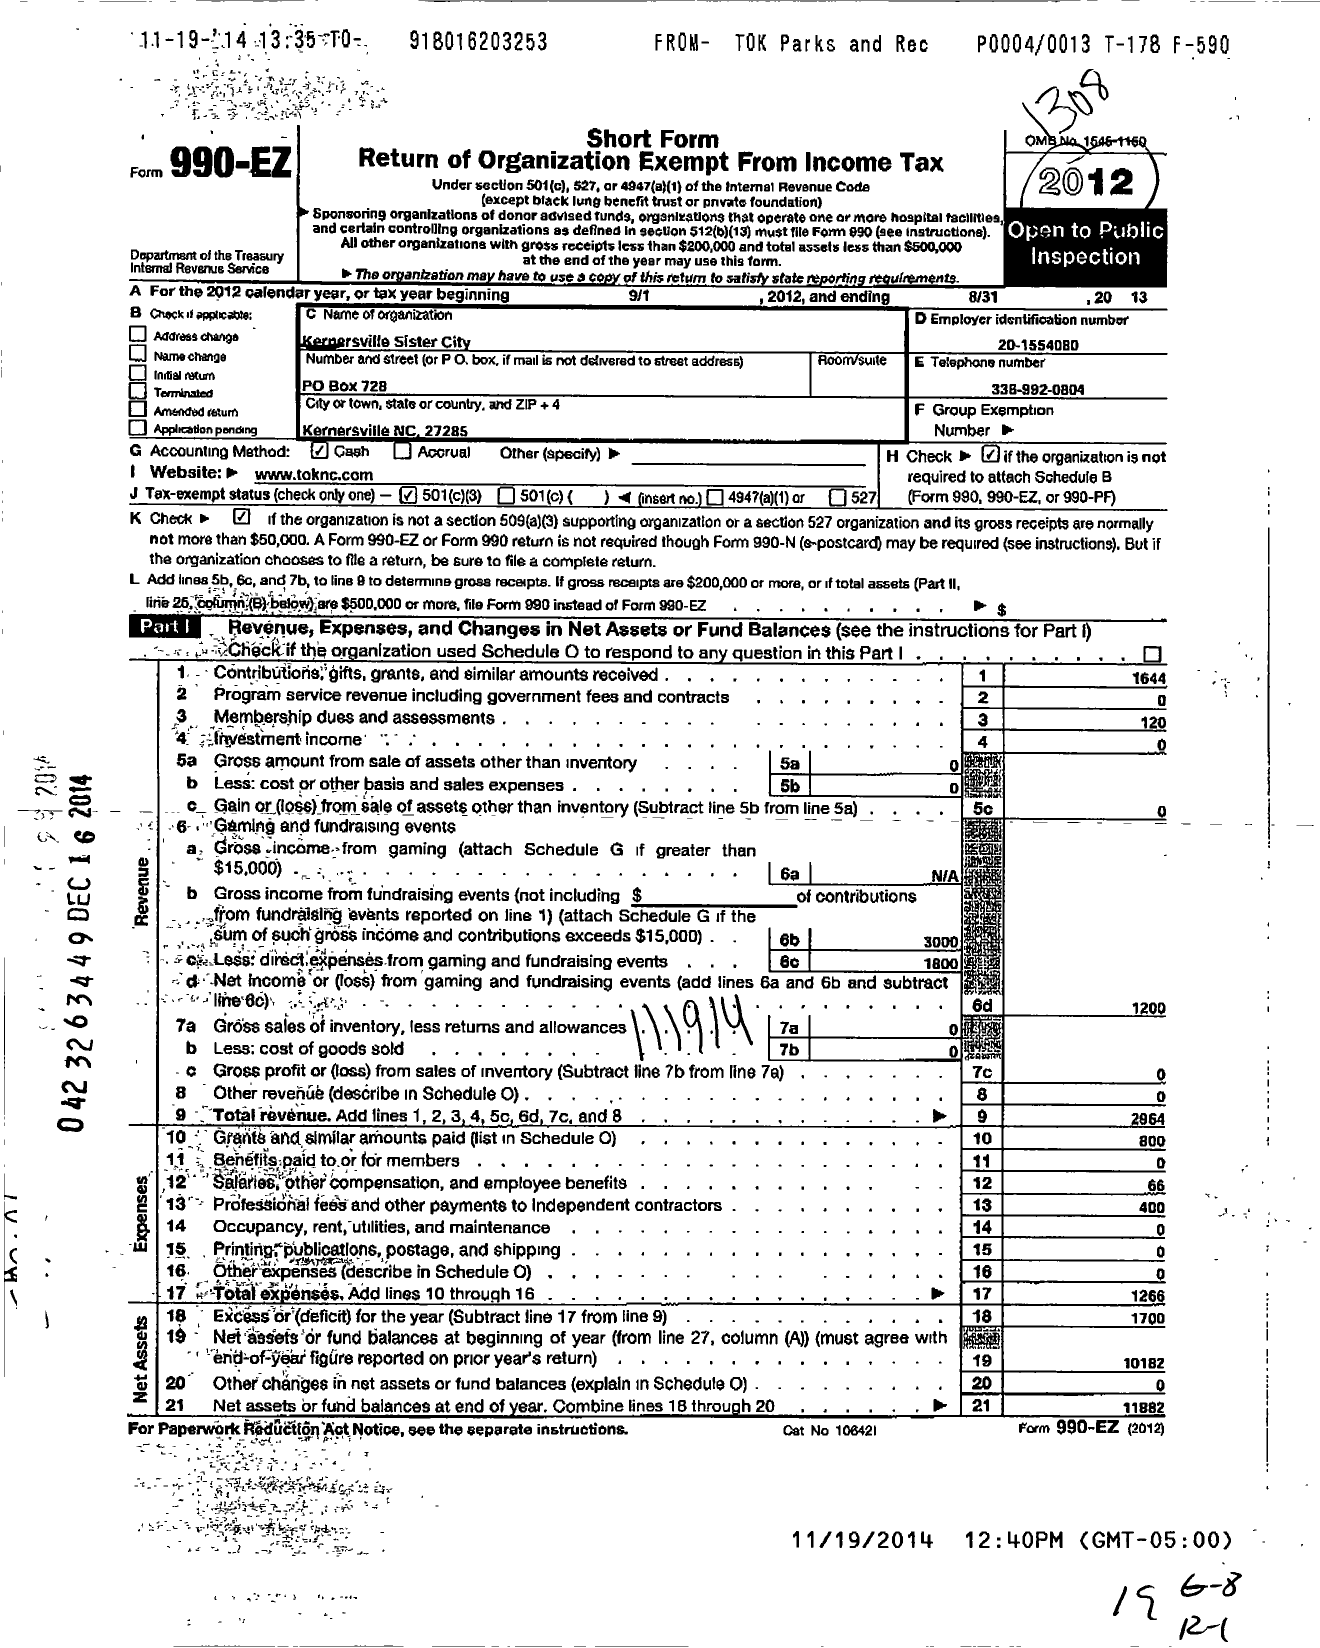 Image of first page of 2012 Form 990EZ for Kernersville Sister City Association